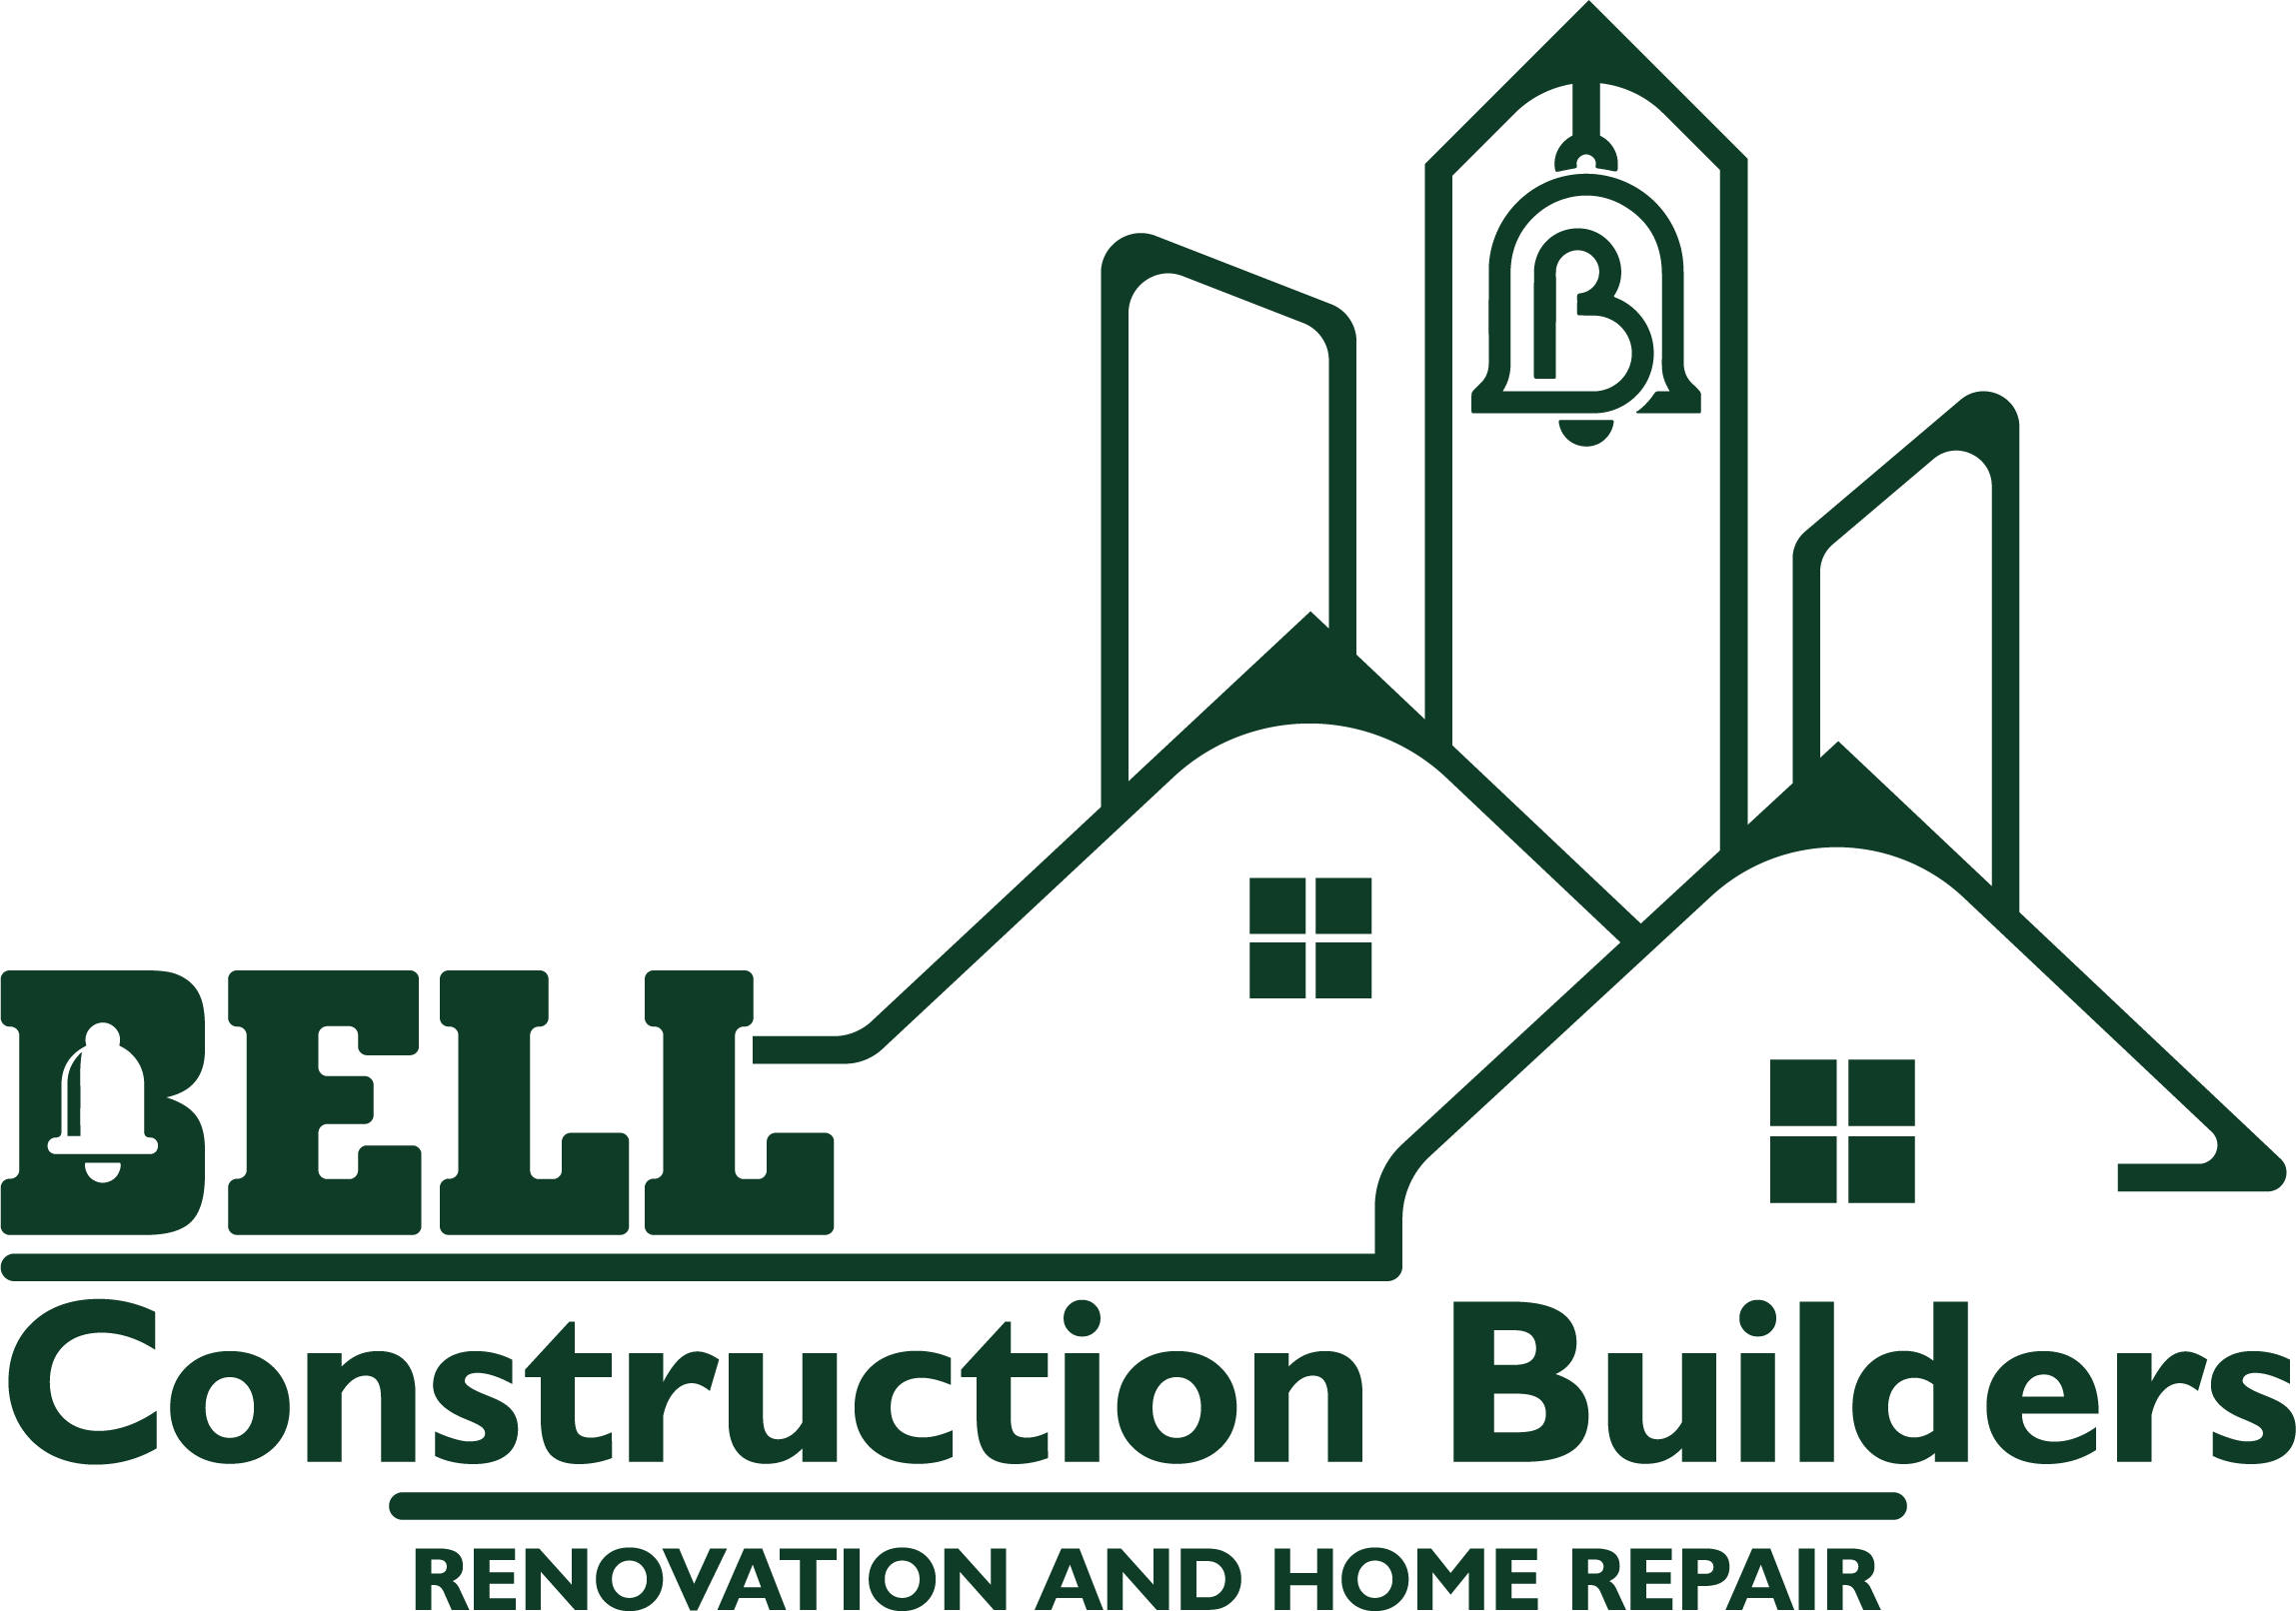 Bell Construction Builders